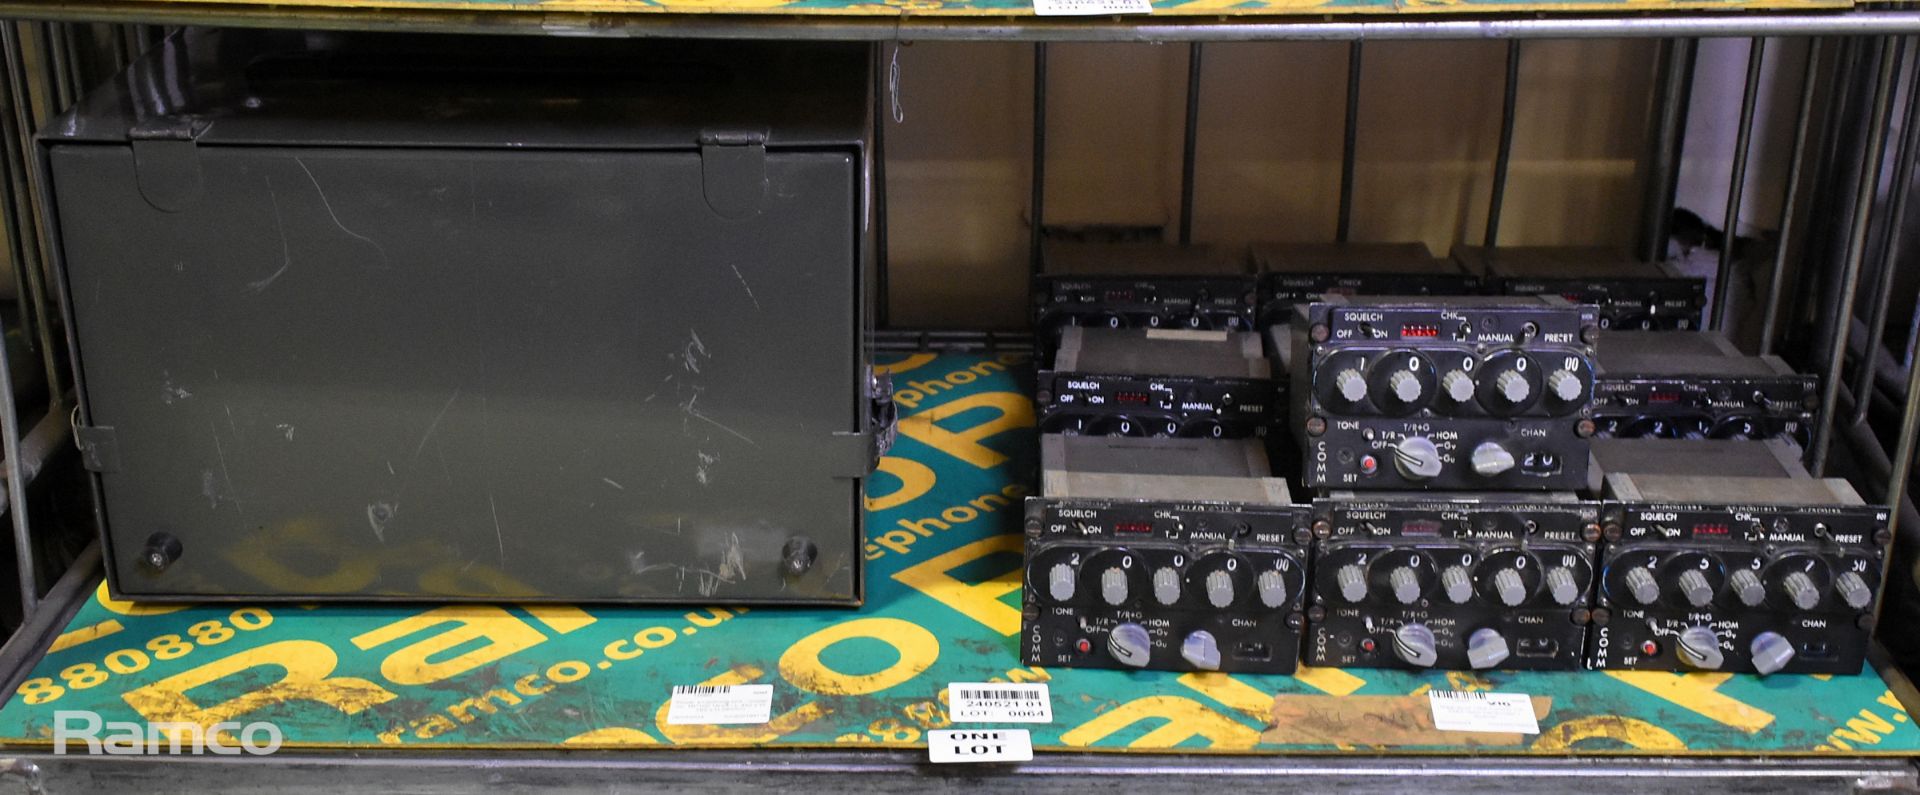 Power smoothing unit - model no: MP100 1KVA, 10x Magnavox USA Control CA-248A radio transmitters